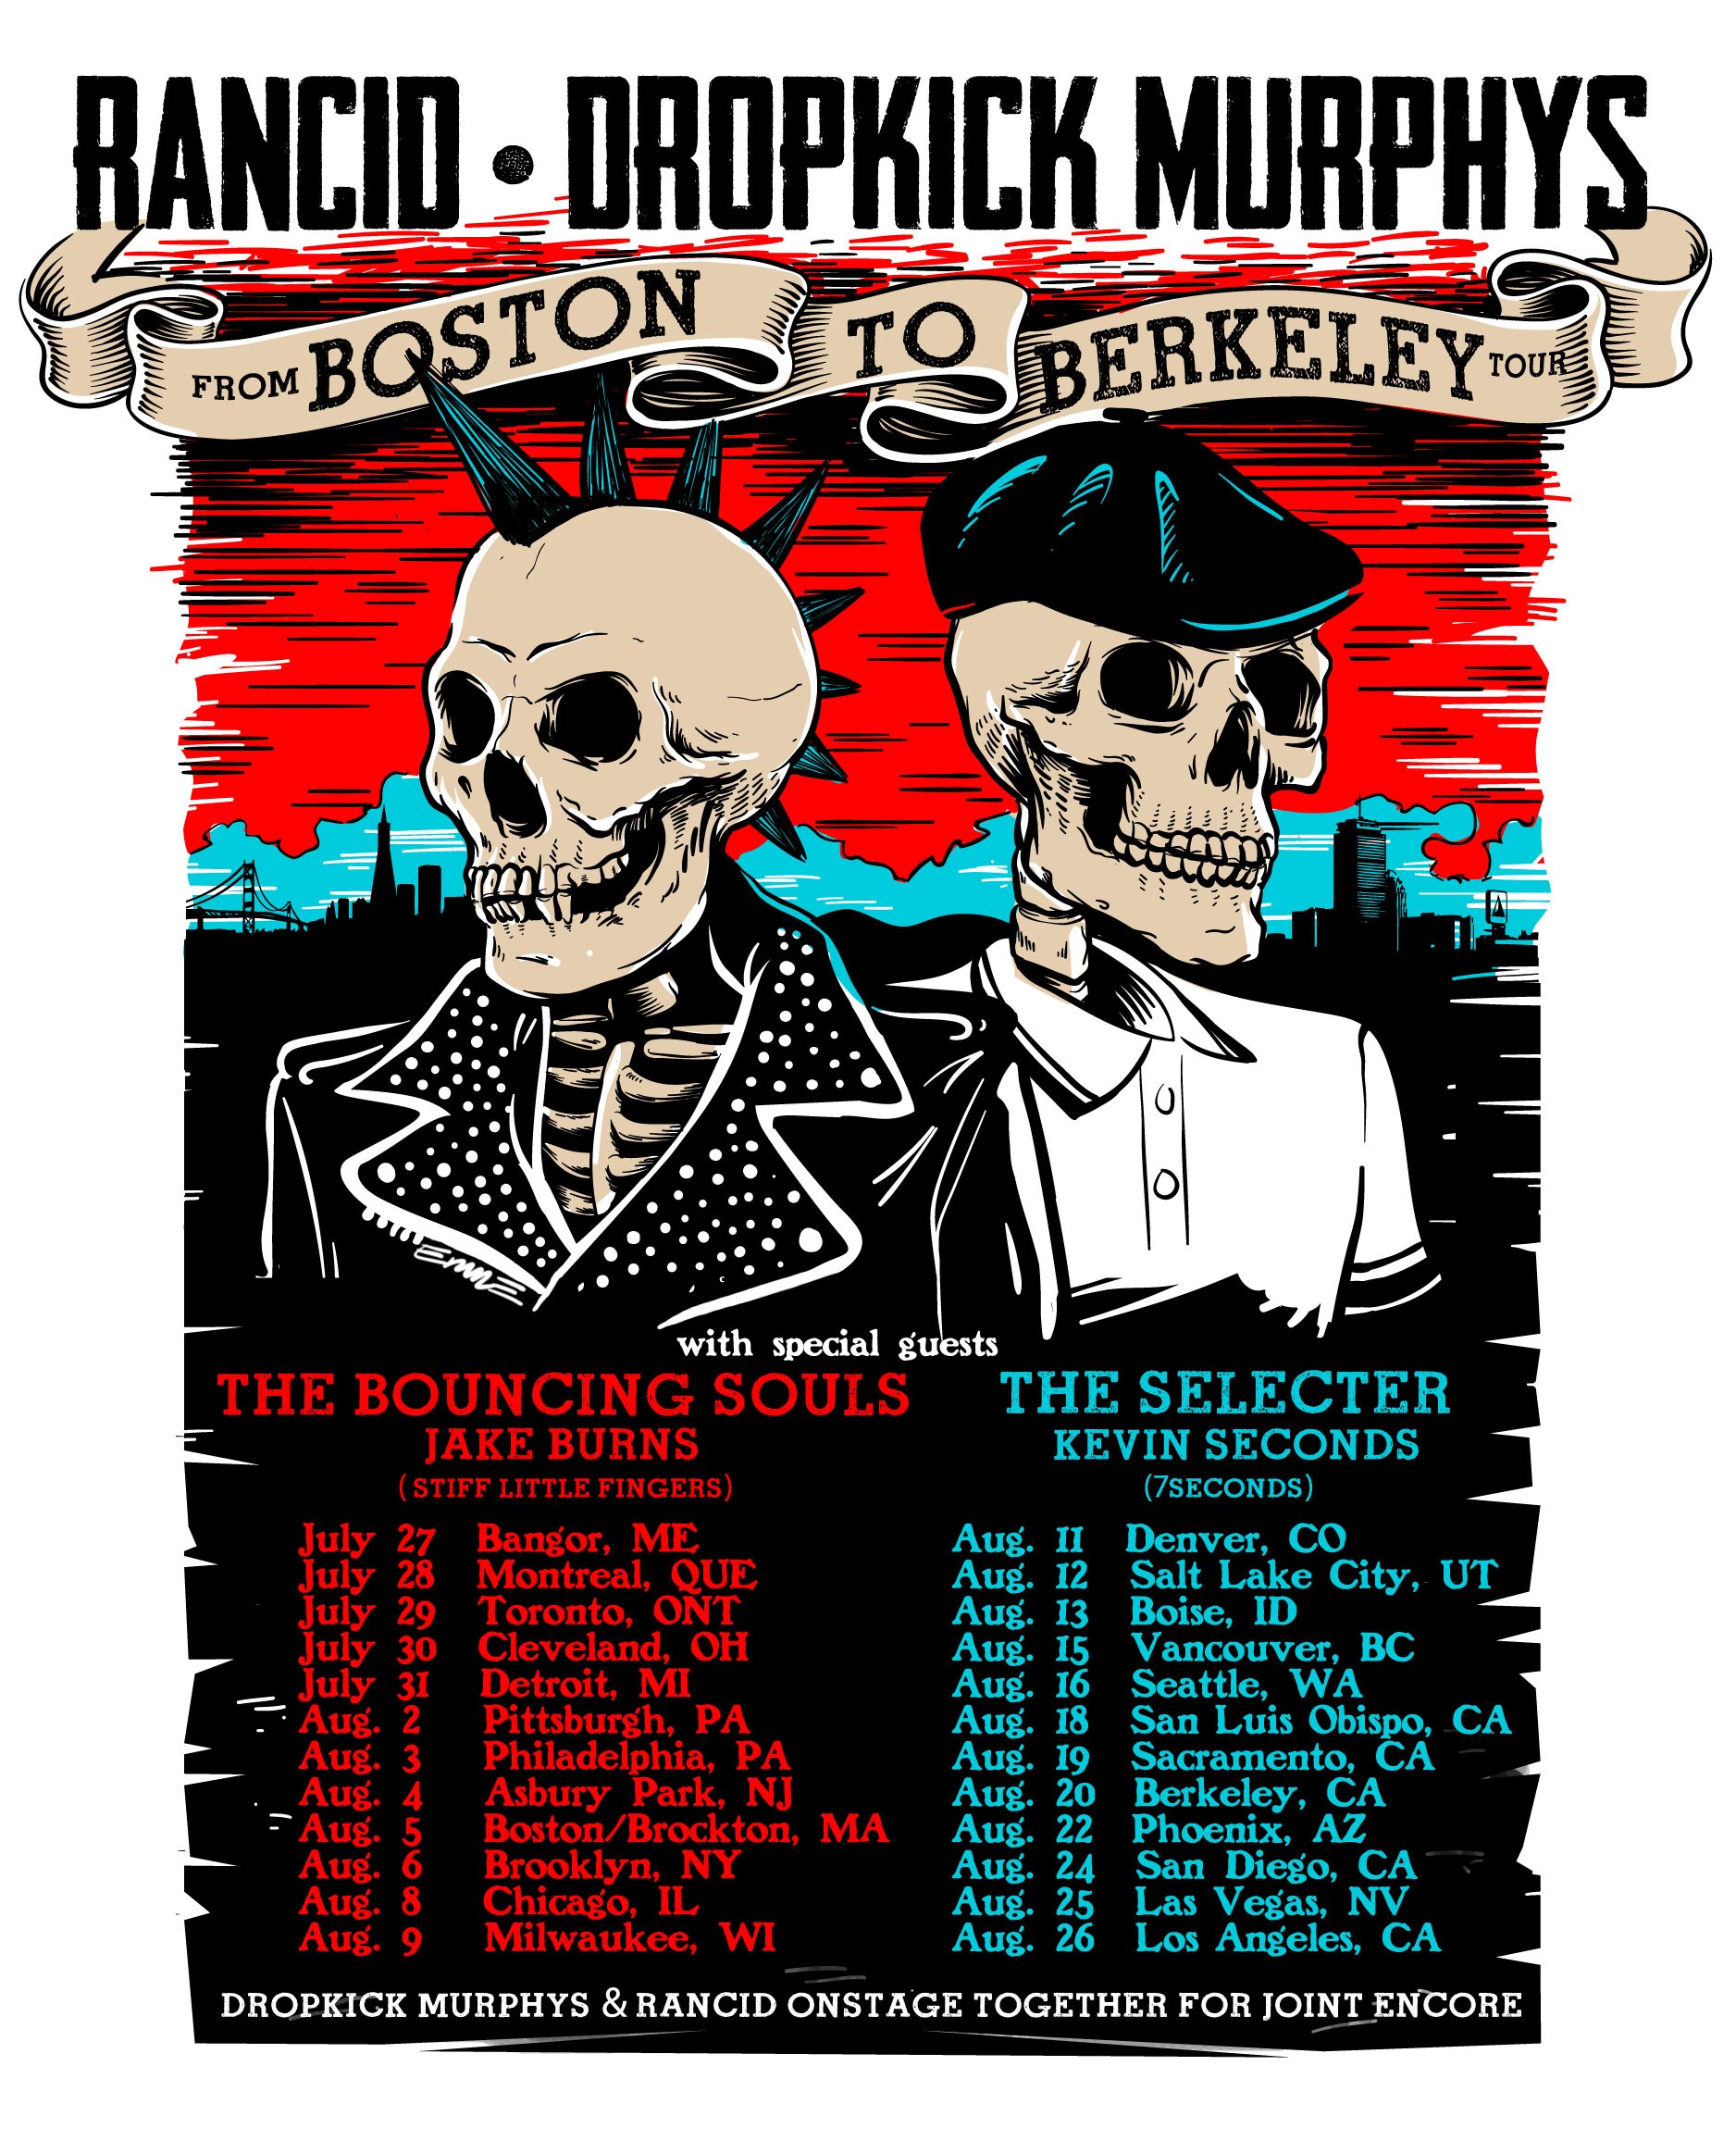  Rancid & Dropkick Murphys From Boston To Berkeley Tour